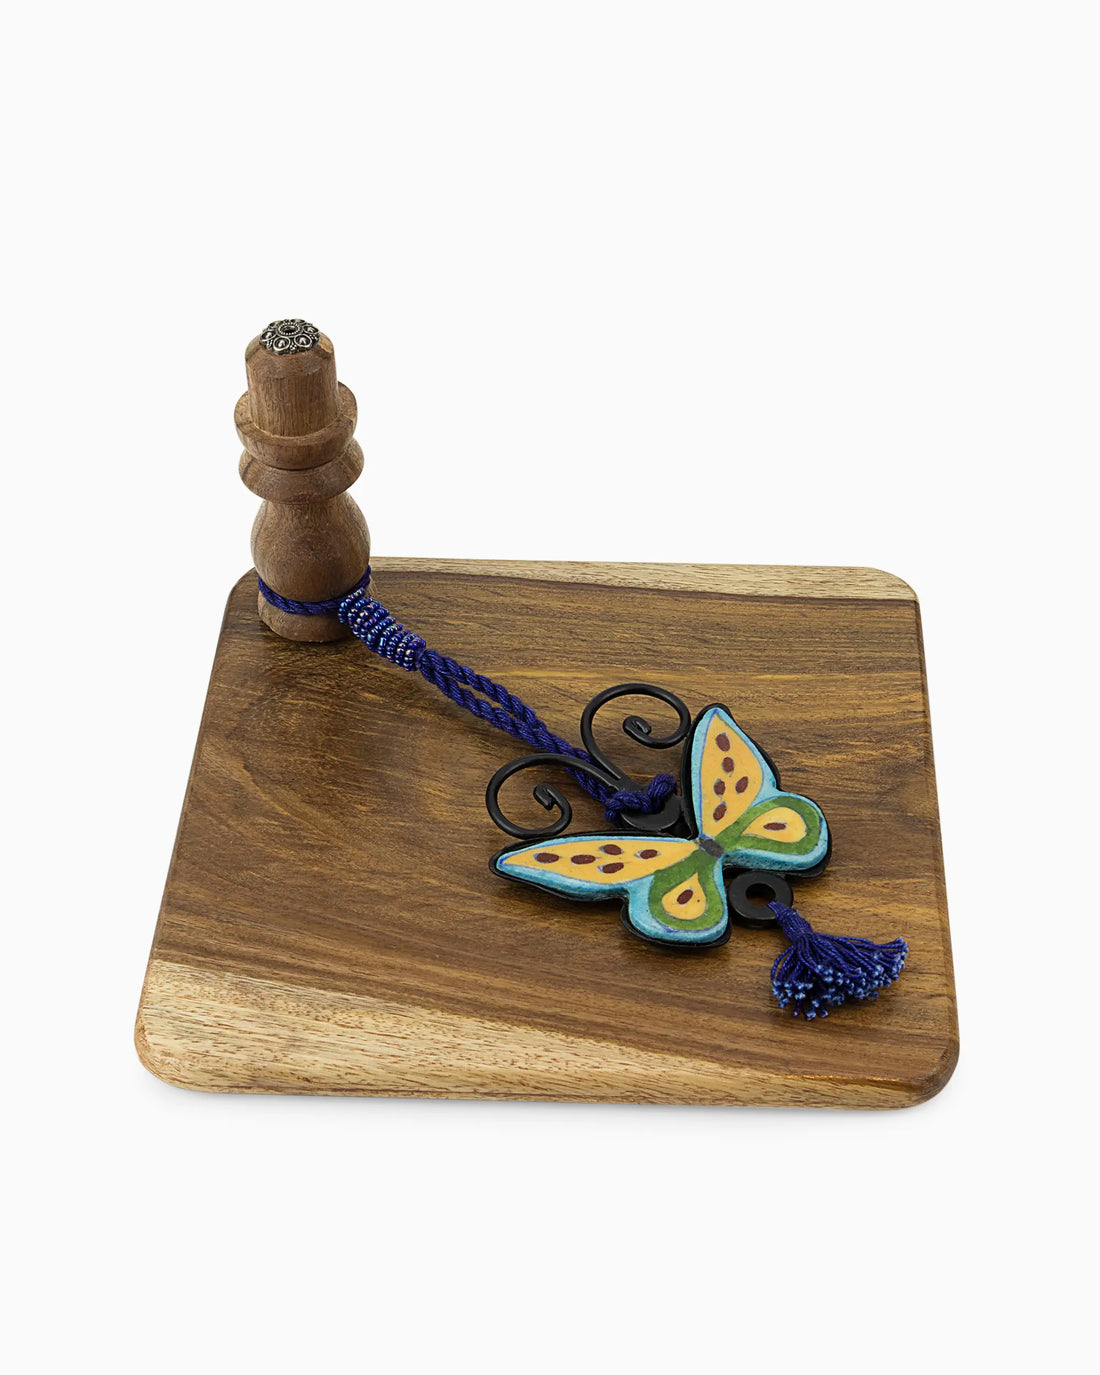 Wooden Napkin Holder with Ceramic Tile Stopper (Set of 2)